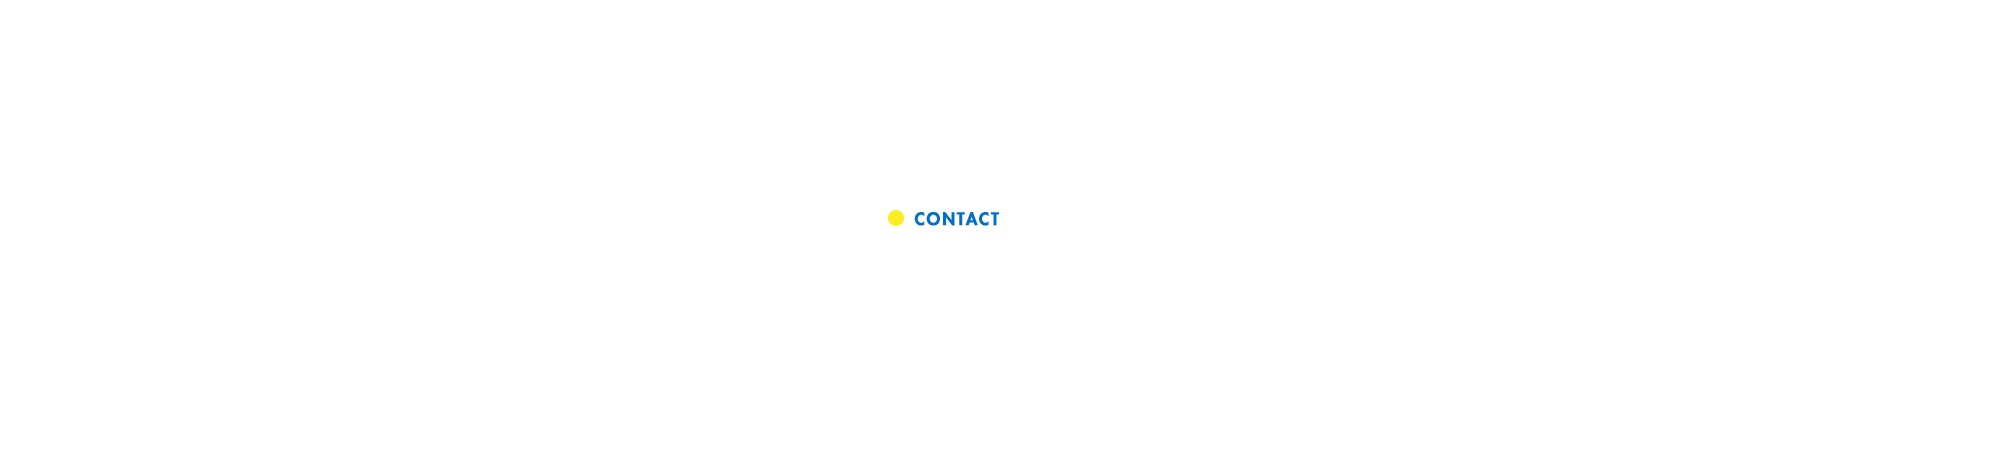 bnr_contact_upper